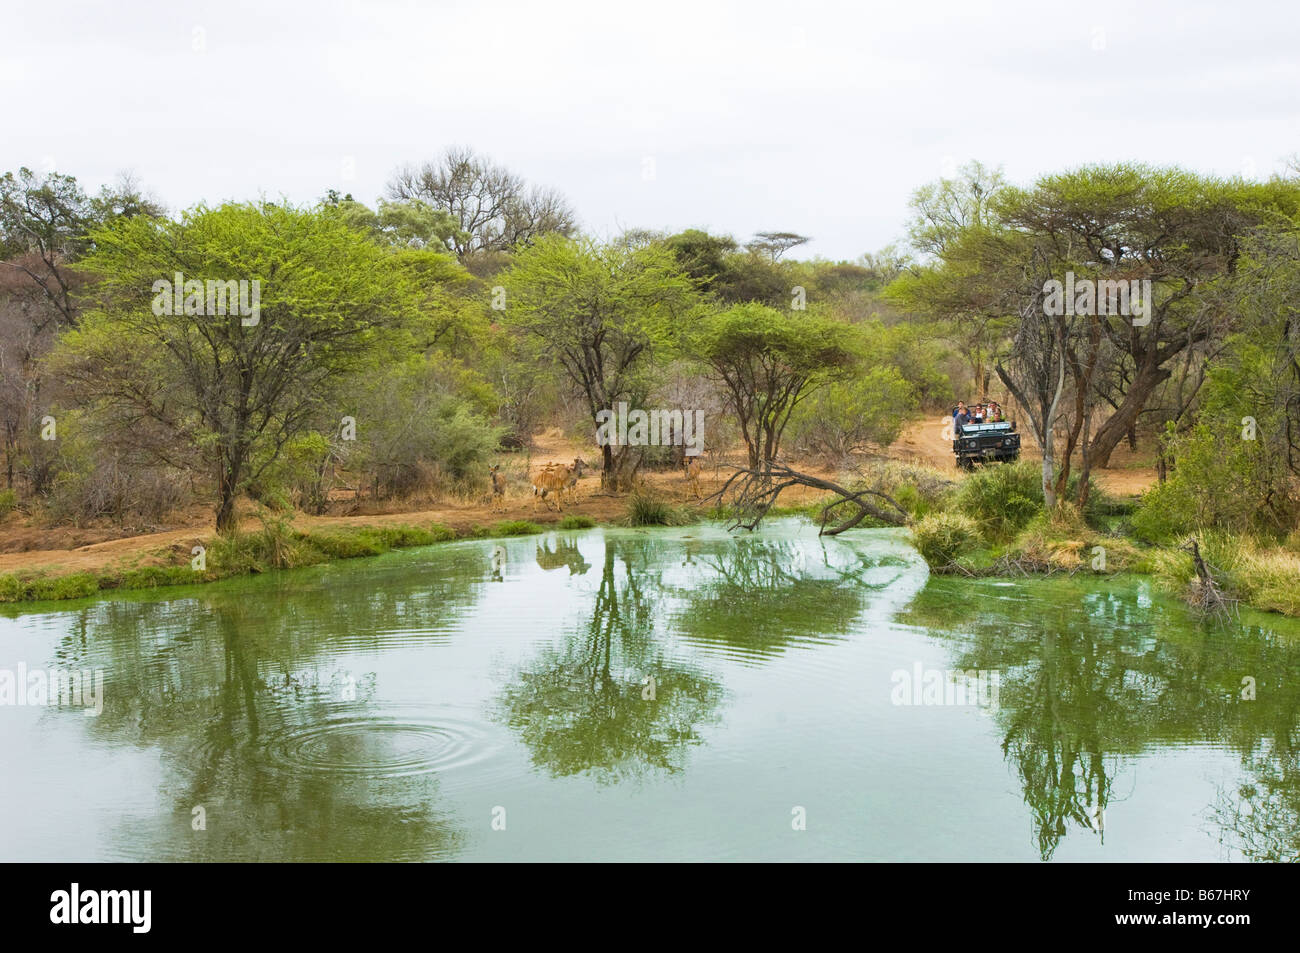 Jepp Safari zu einem grünen Wasserloch Antilopen Fahrzeug Volk Urlaub Südafrika Akazien Stockfoto